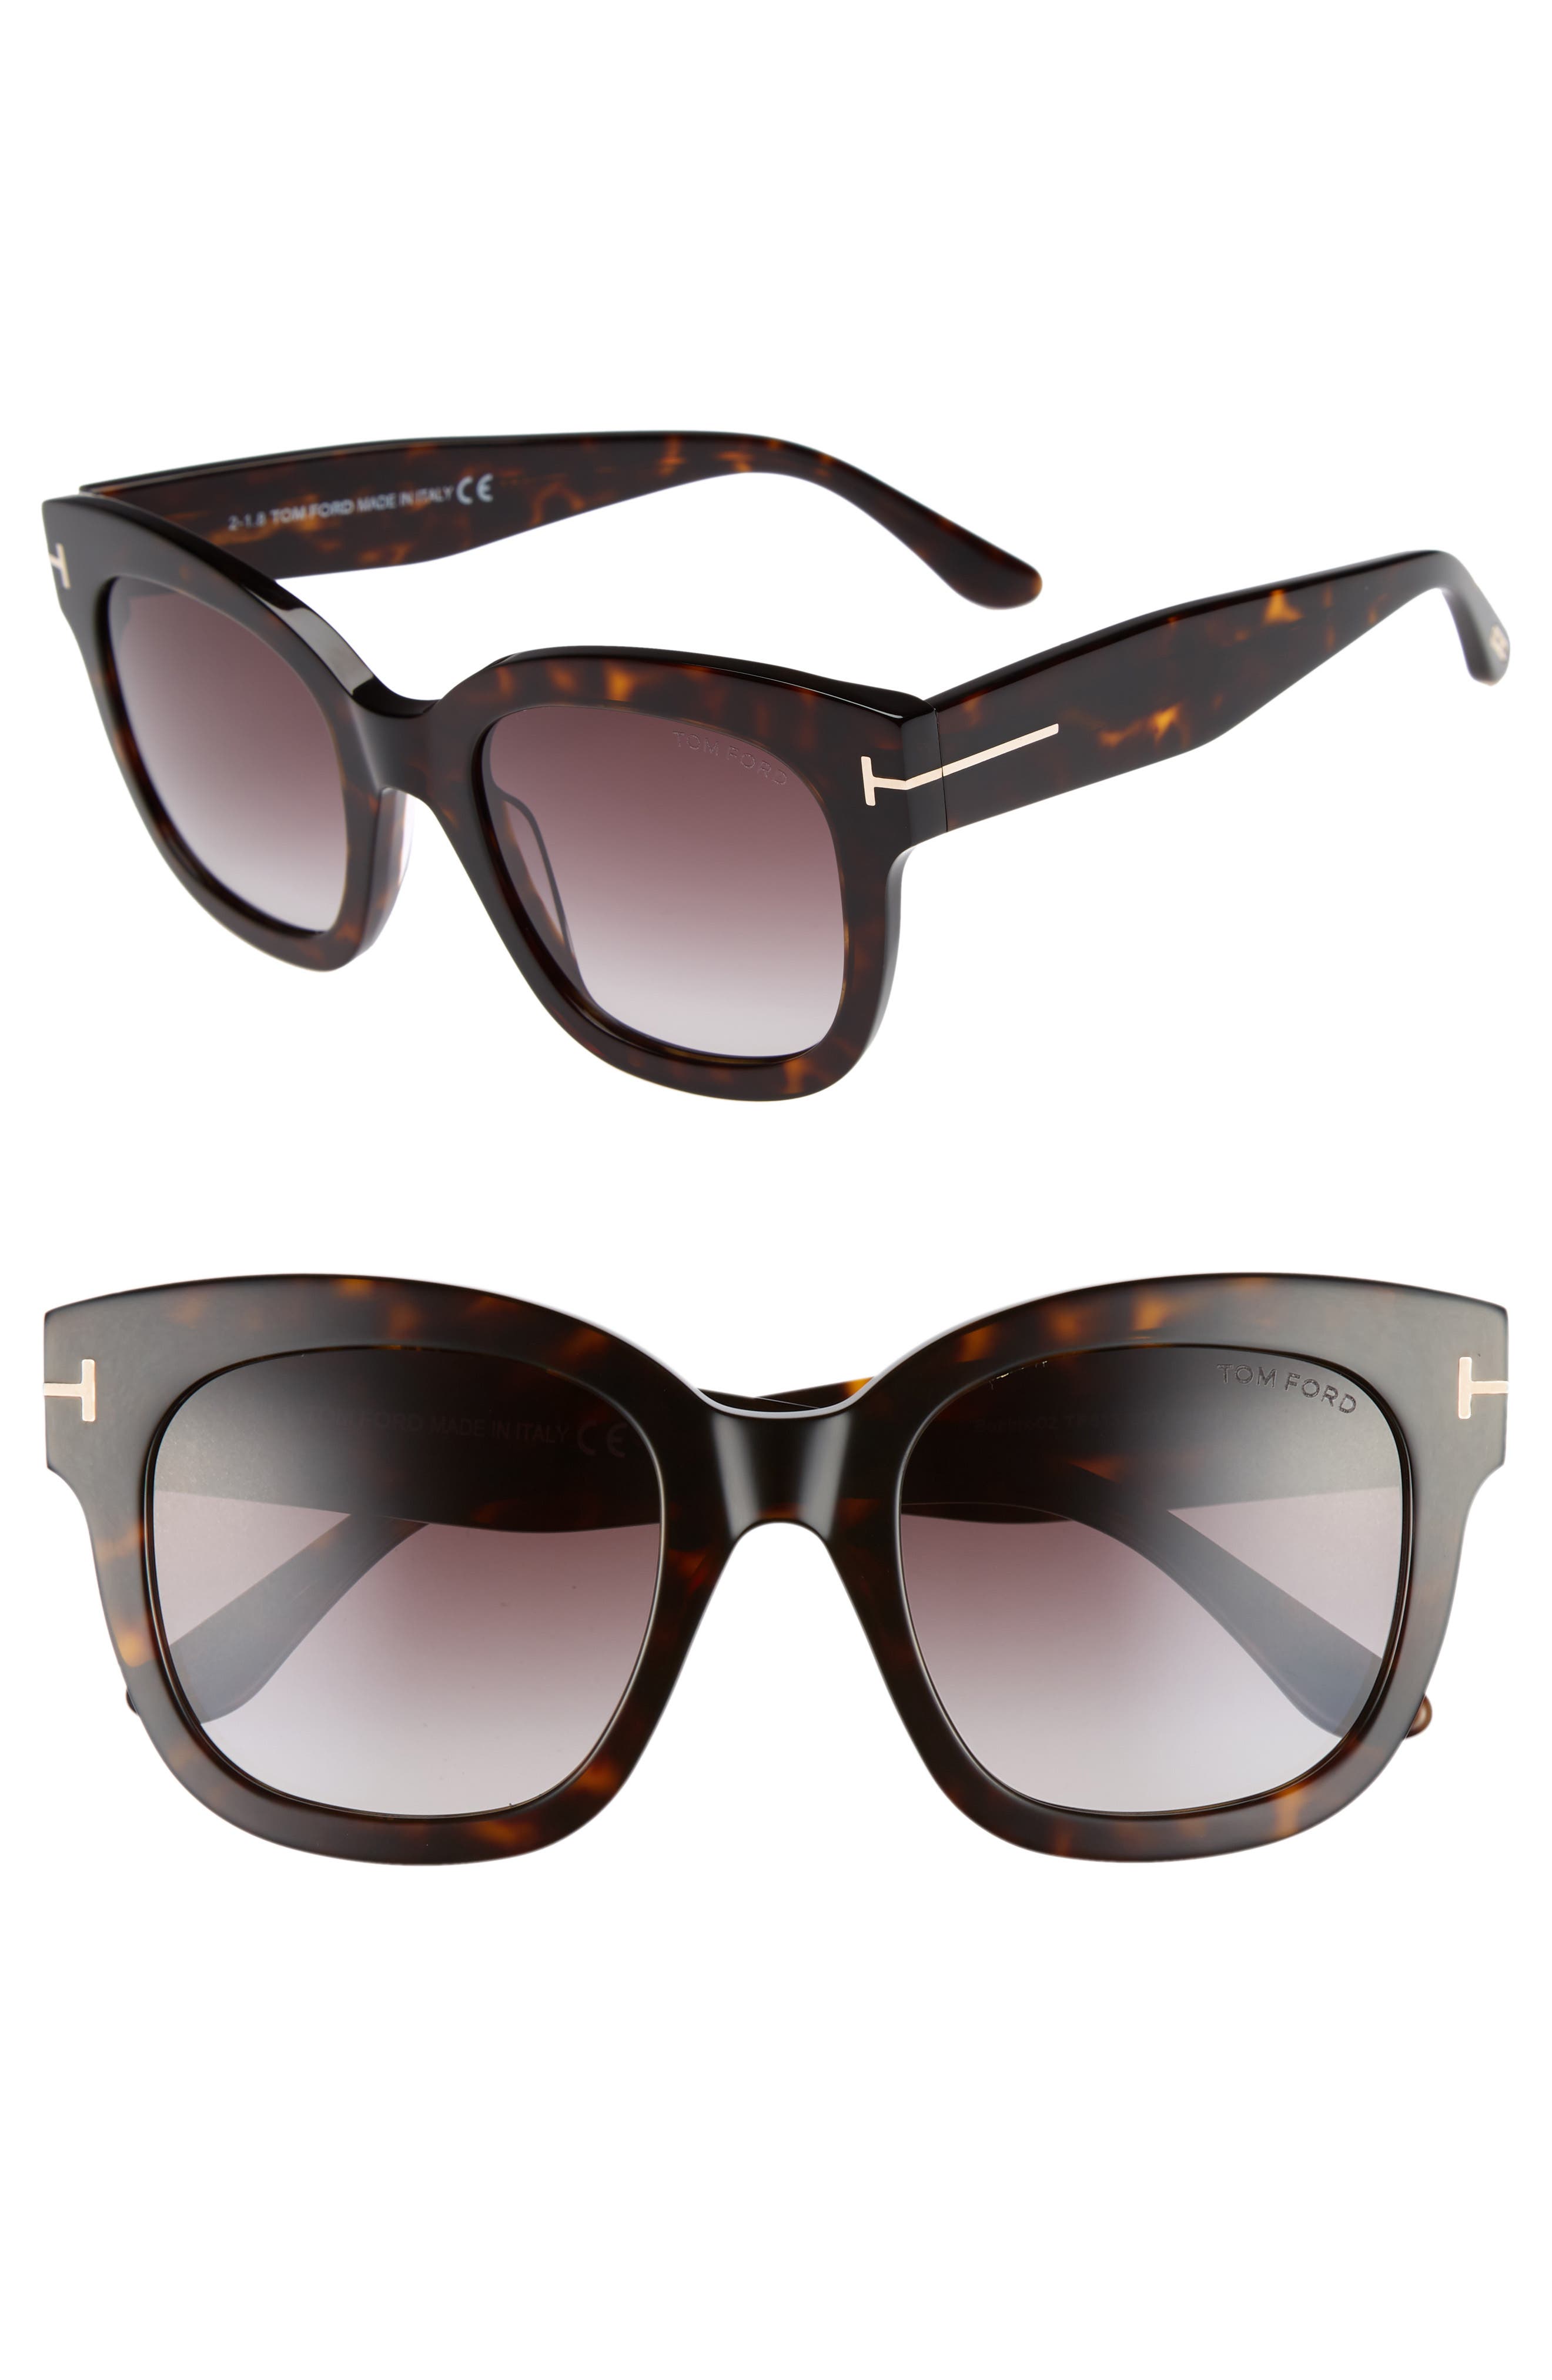 Tom Ford Beatrix 52mm Sunglasses in Dark Havana/Gradient Bordeaux at Nordstrom